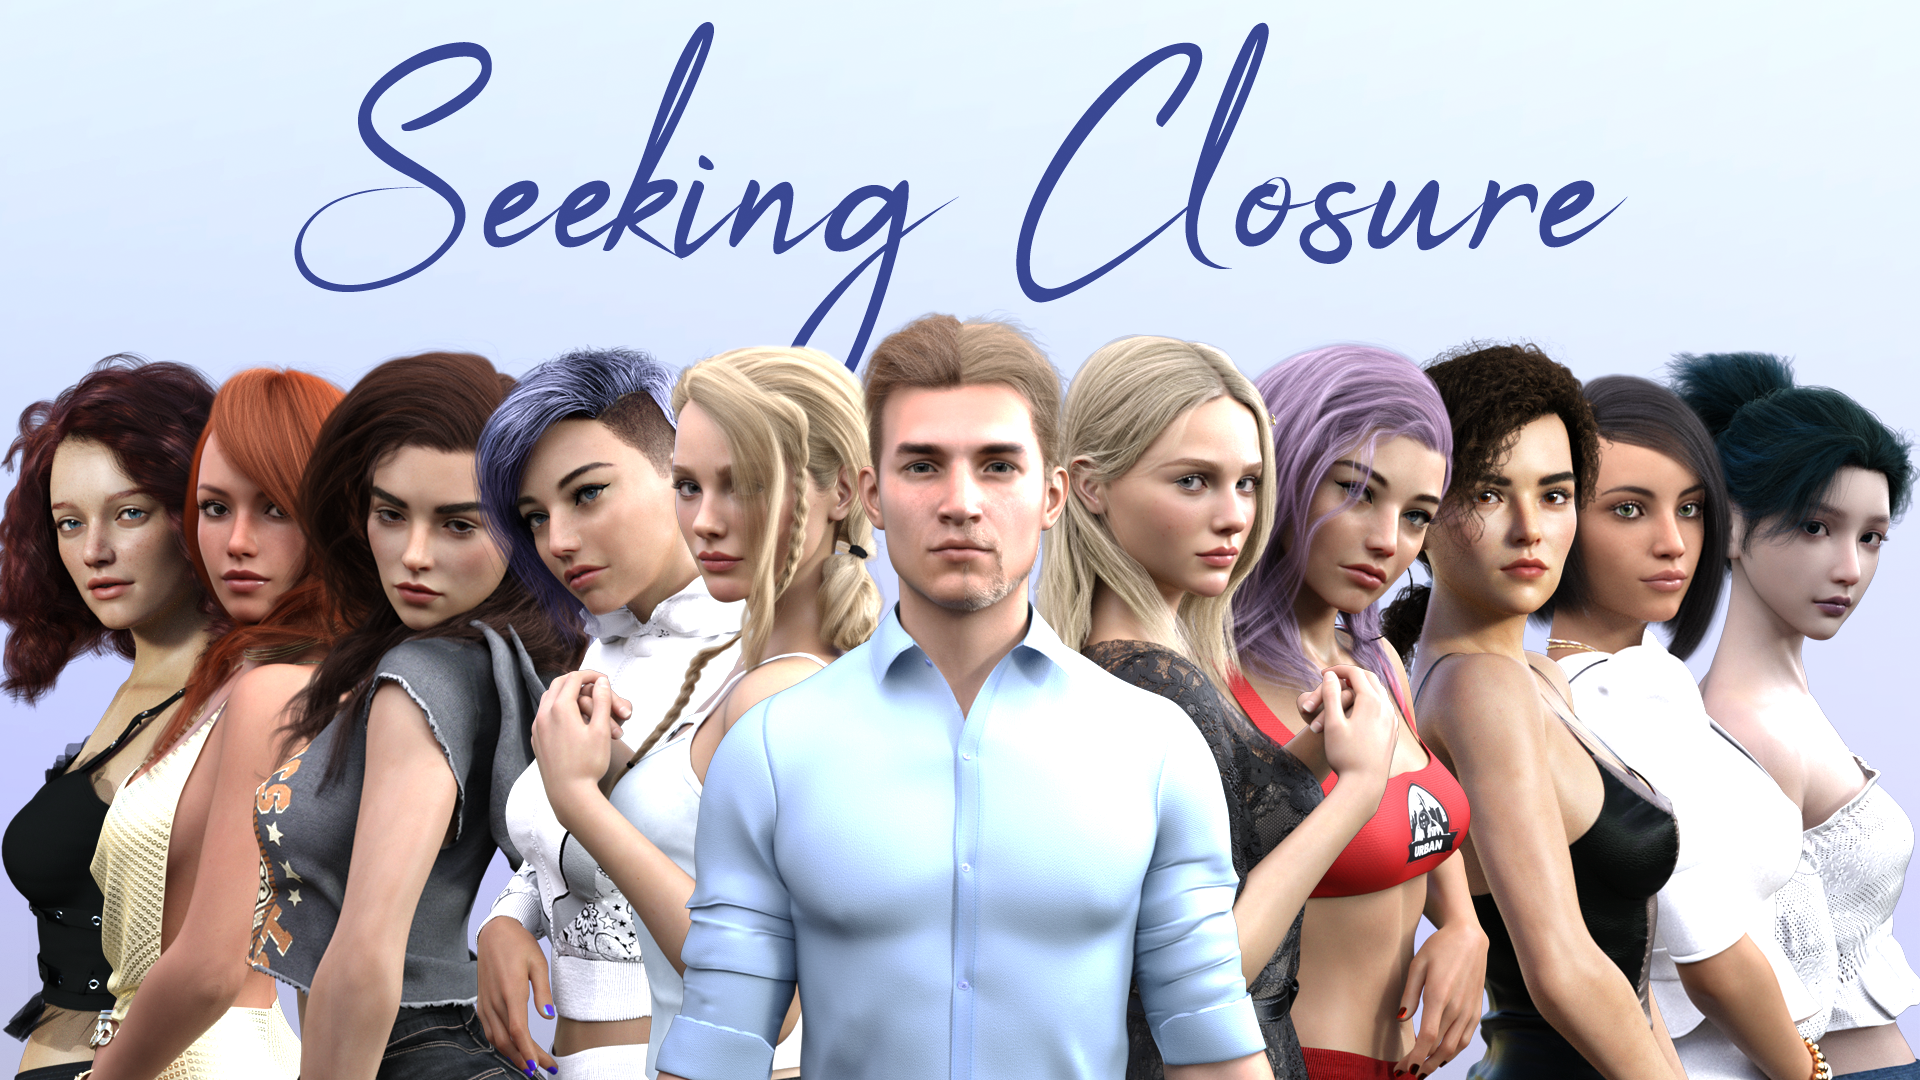 Seeking Closure1.png